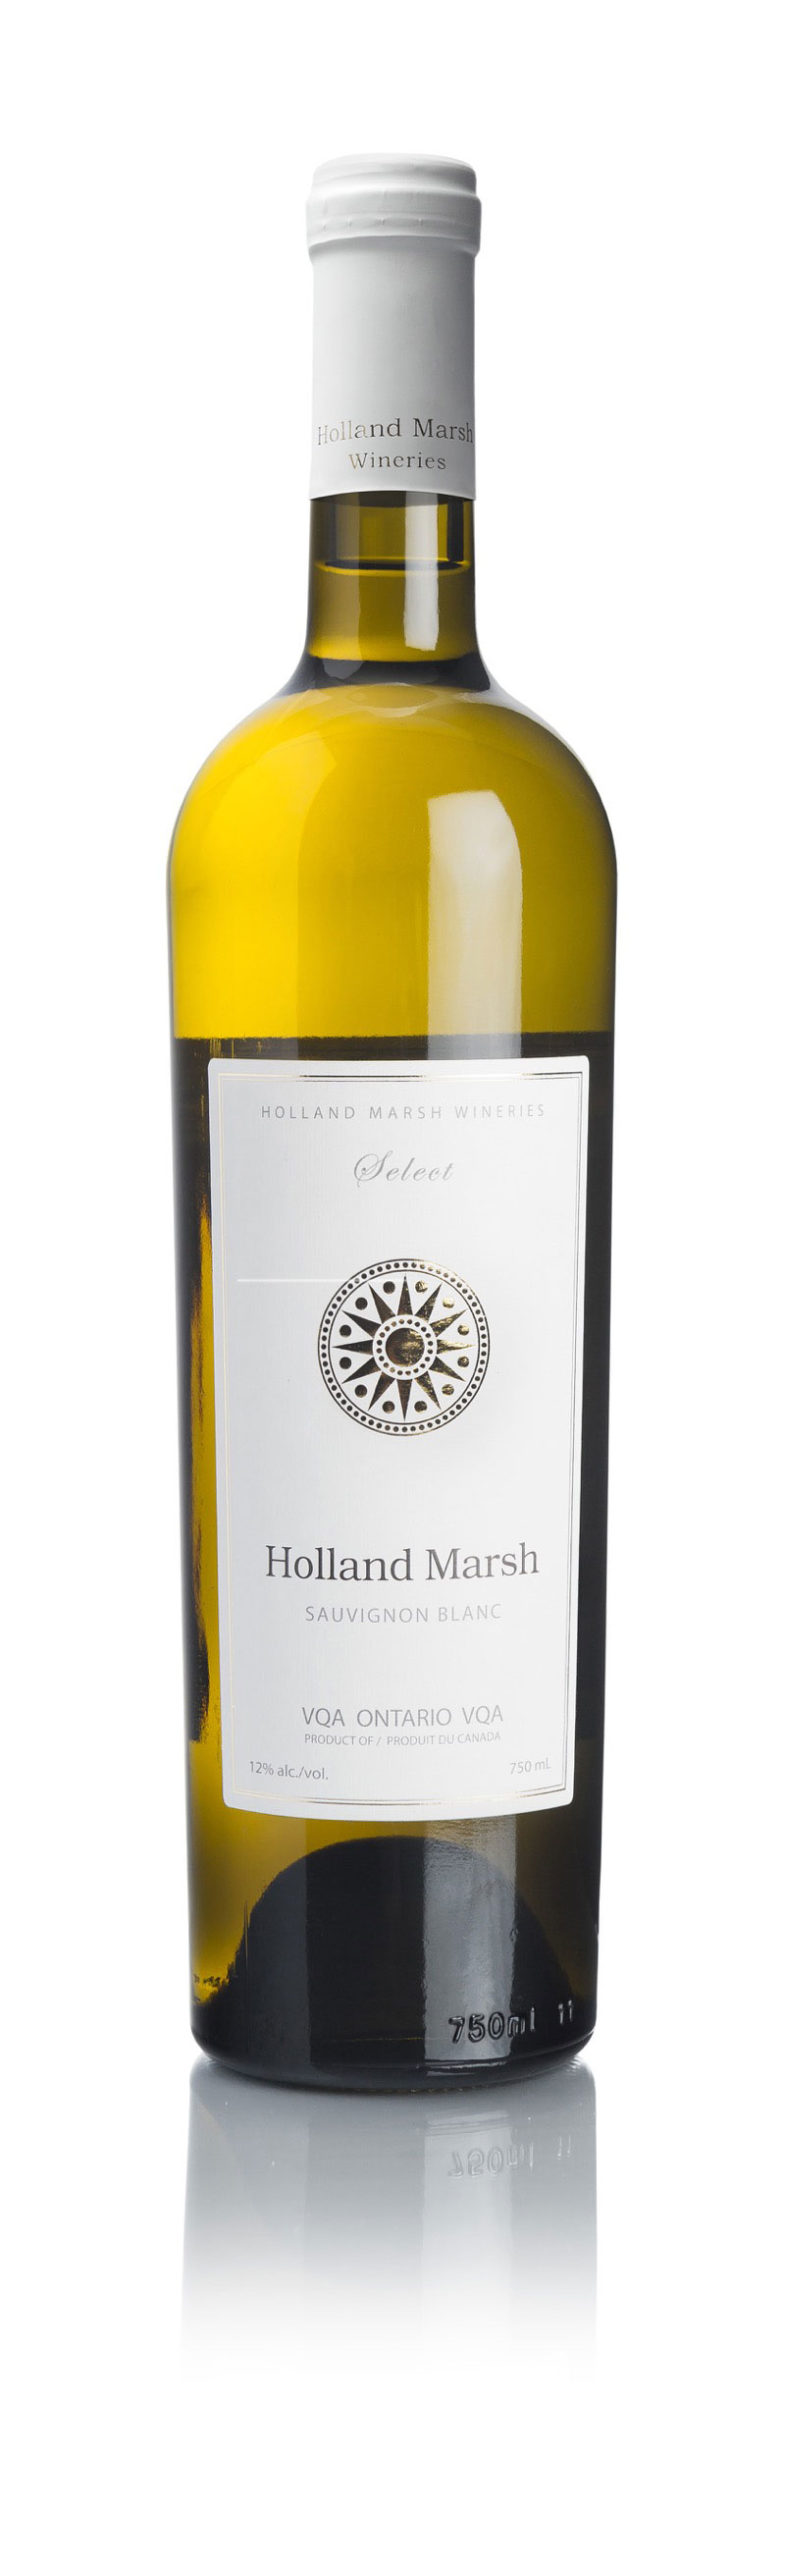 Holland Marsh Winery - 2014 Select Sauvignon Blanc